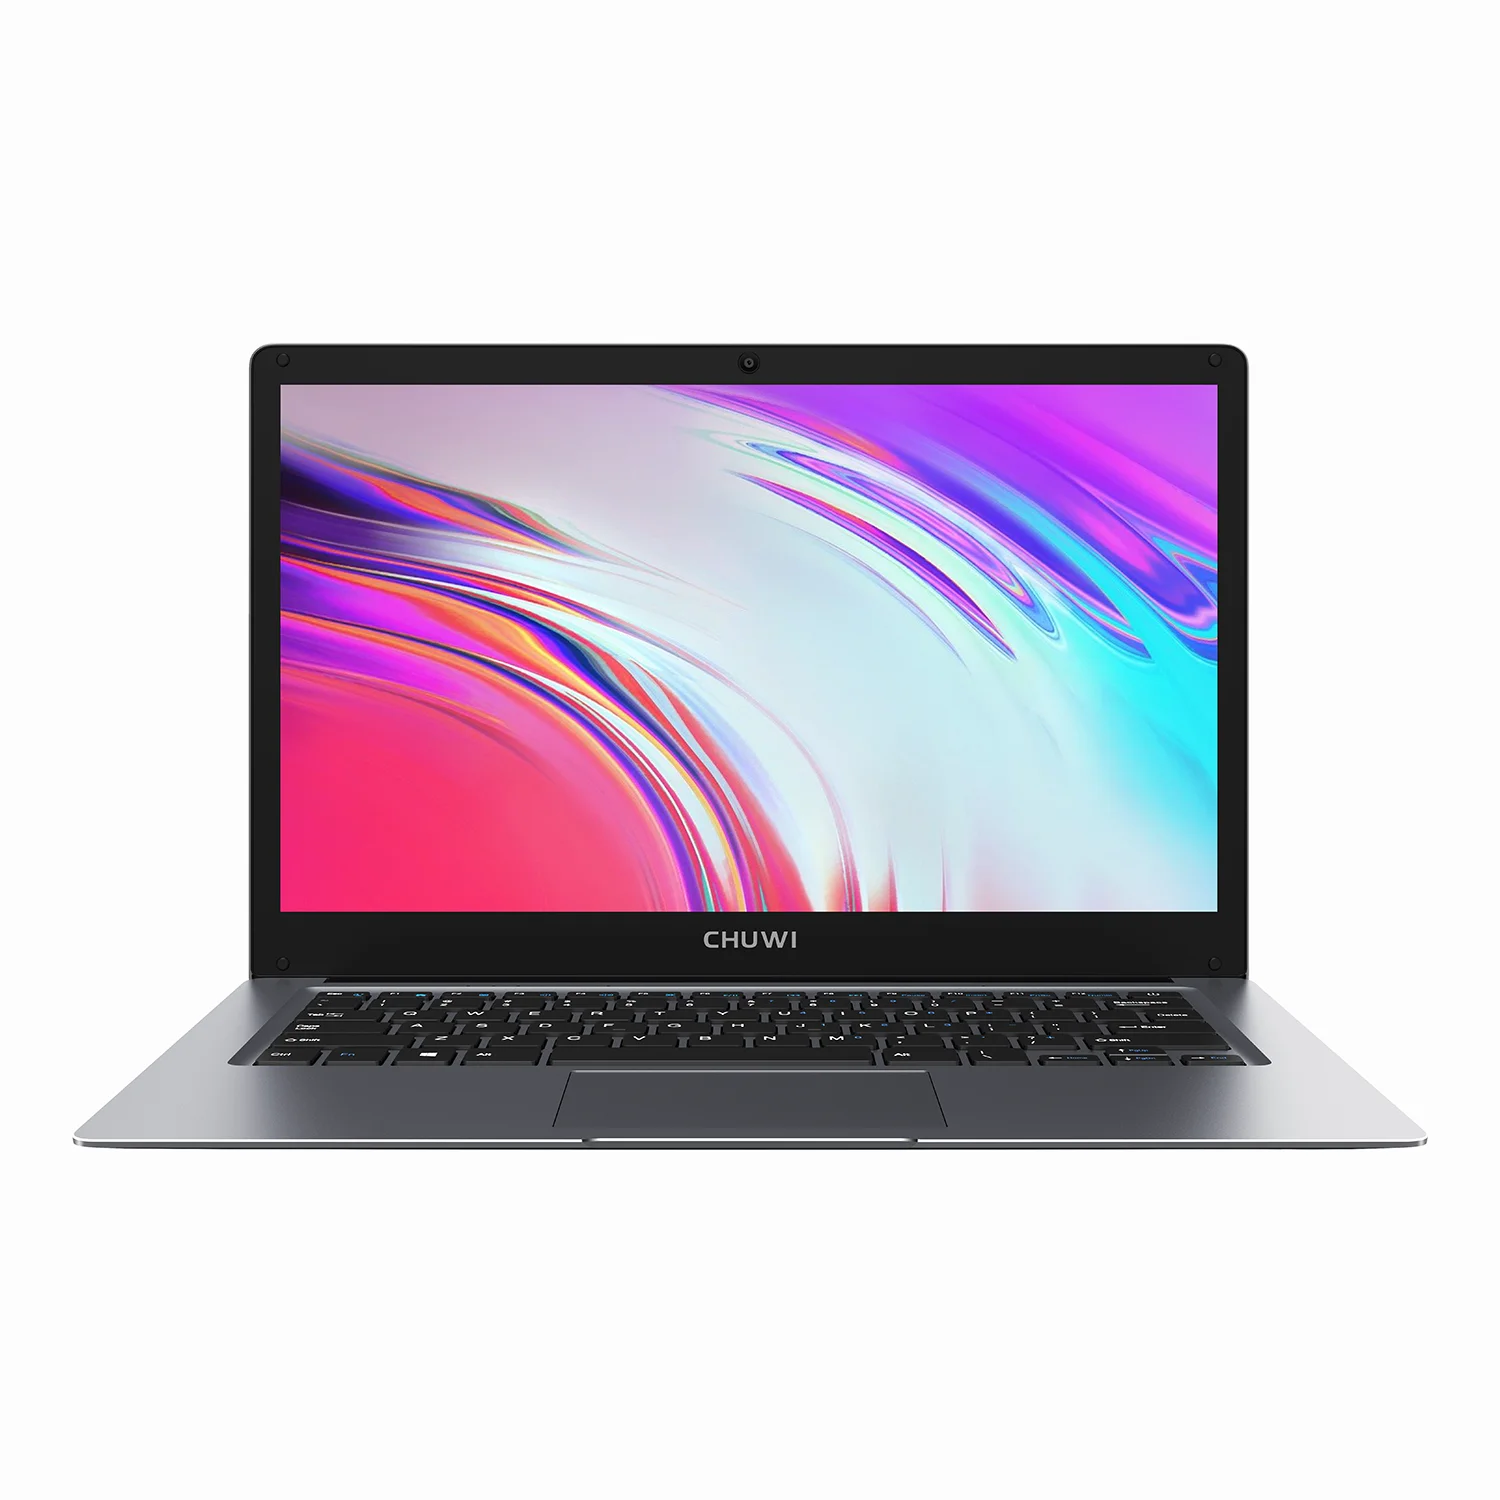 

2021 New HeroBook Pro CHUWI 1920*1080 IPS 14 inch LCD Laptop Intel N4000 Dual Core Hard Disk BT 5.0 Laptop Deals, Gray